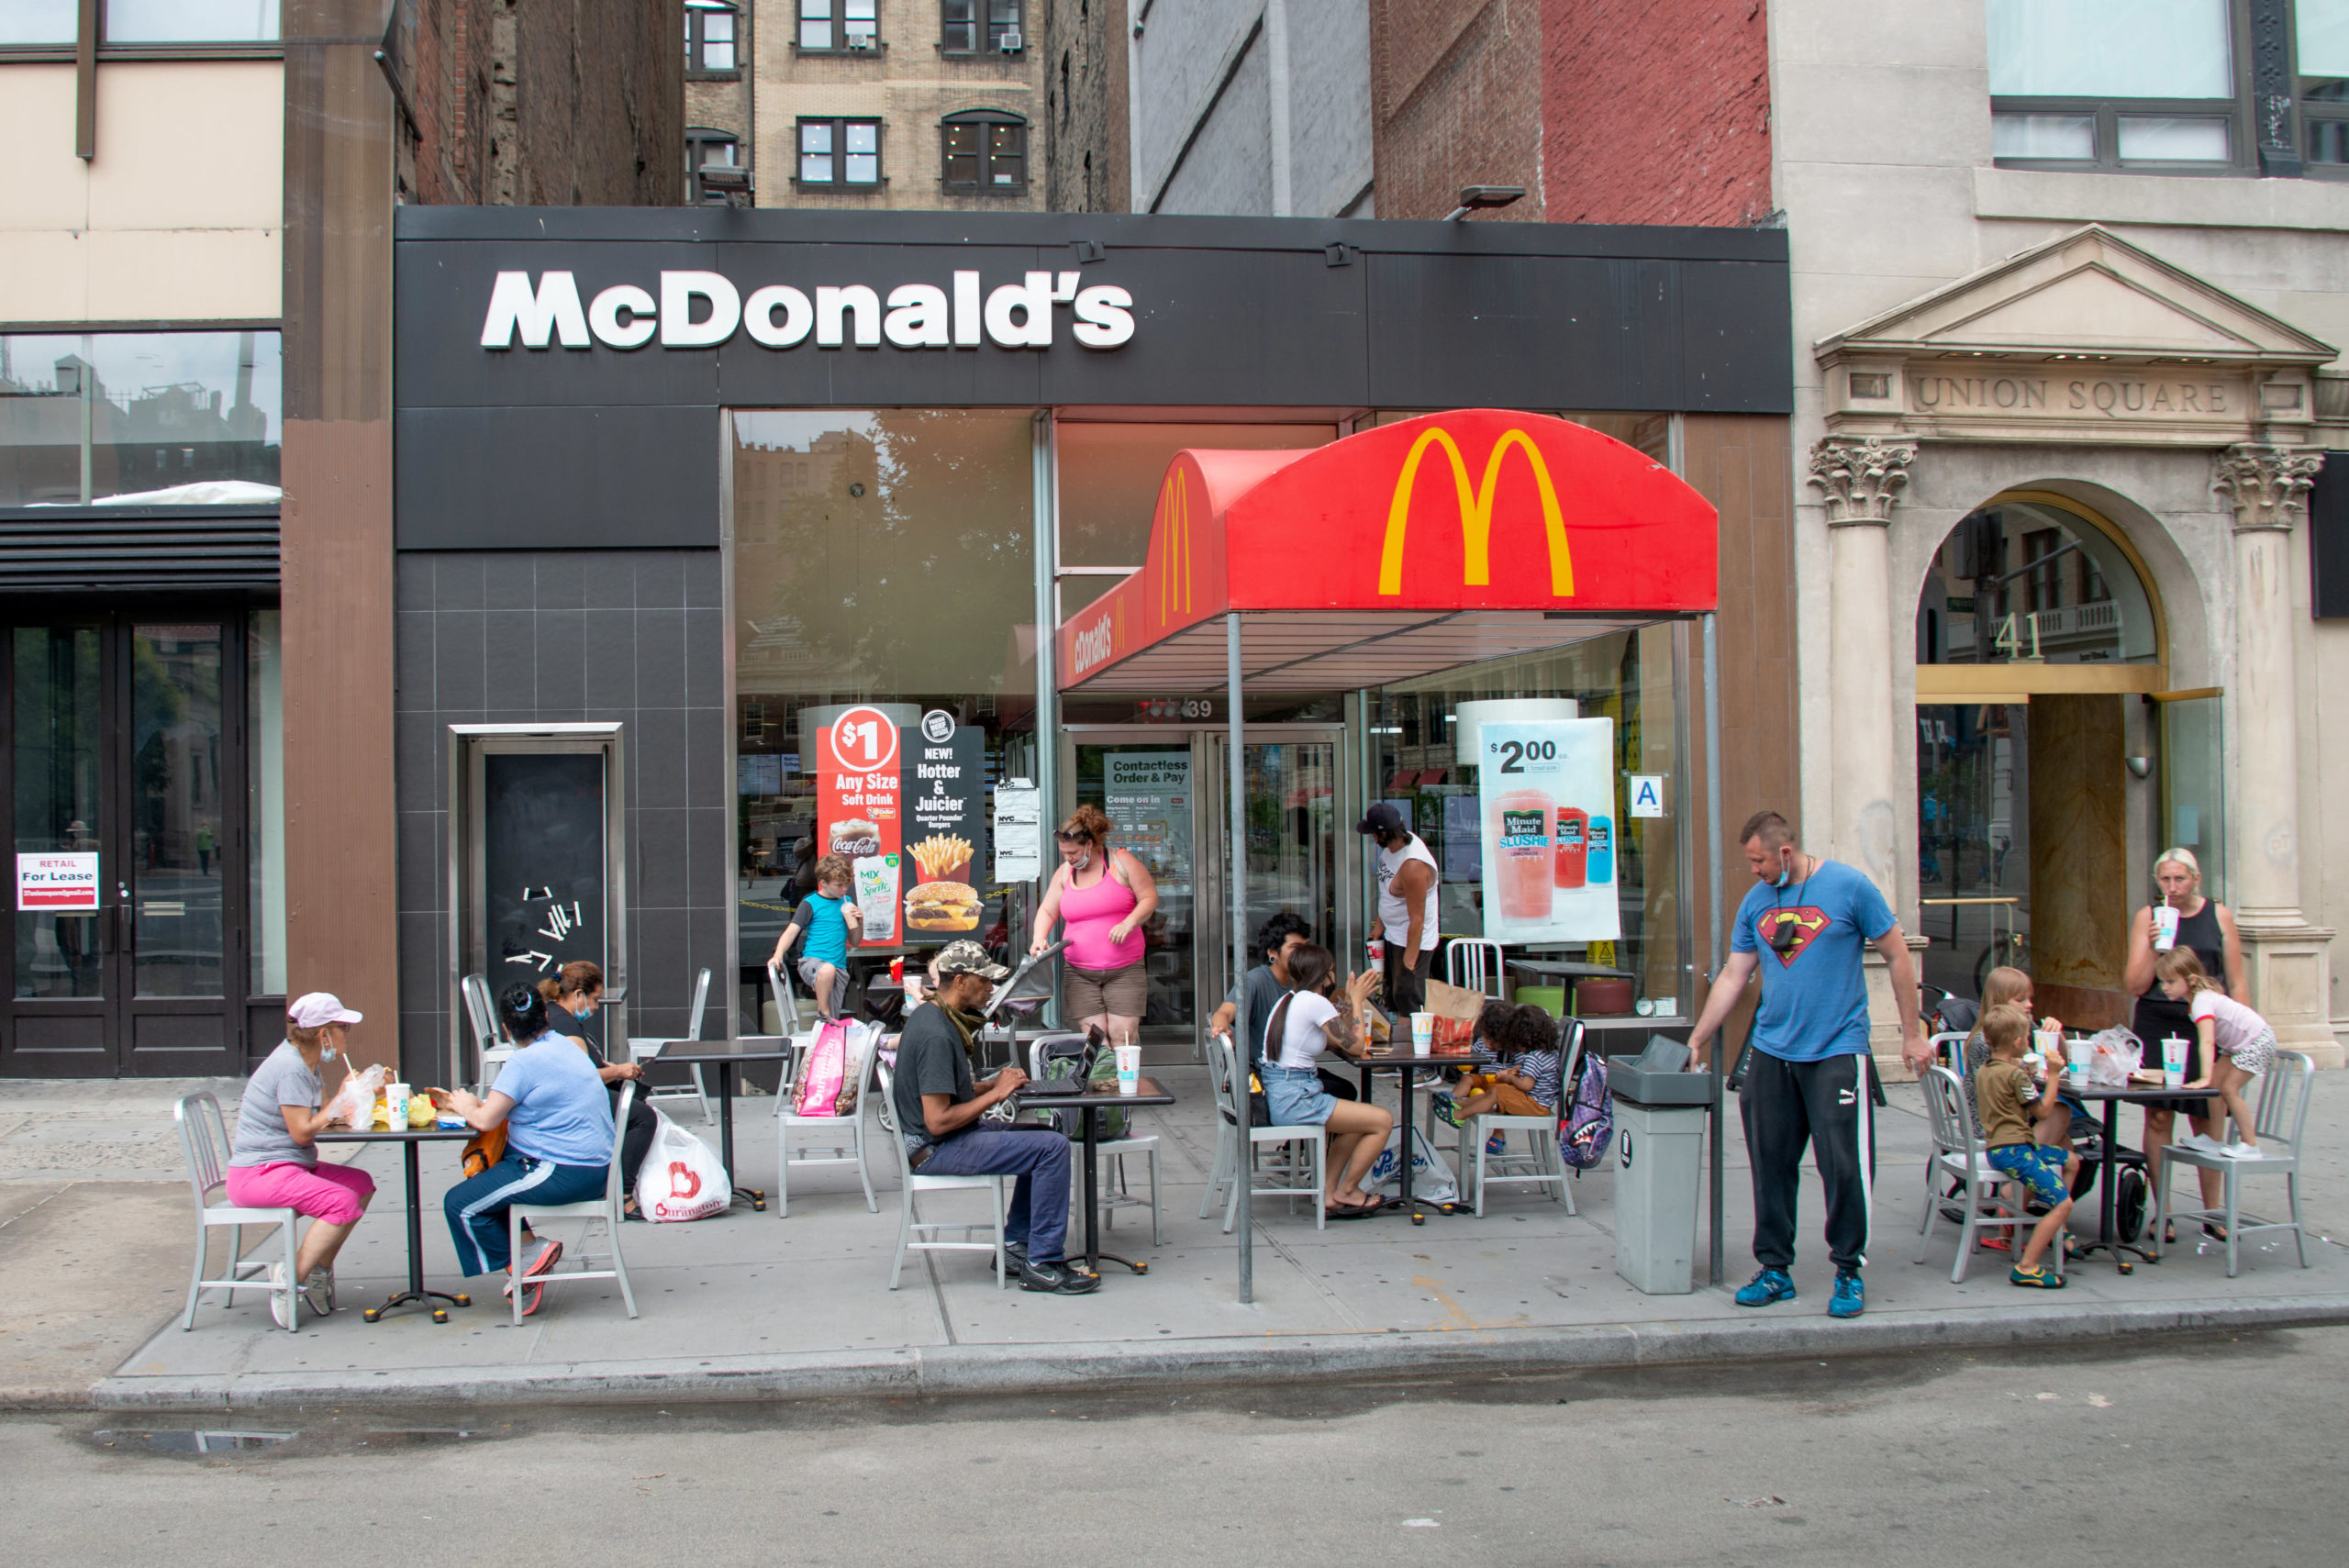 McDonald’s (MCD) Q2 2020 earnings